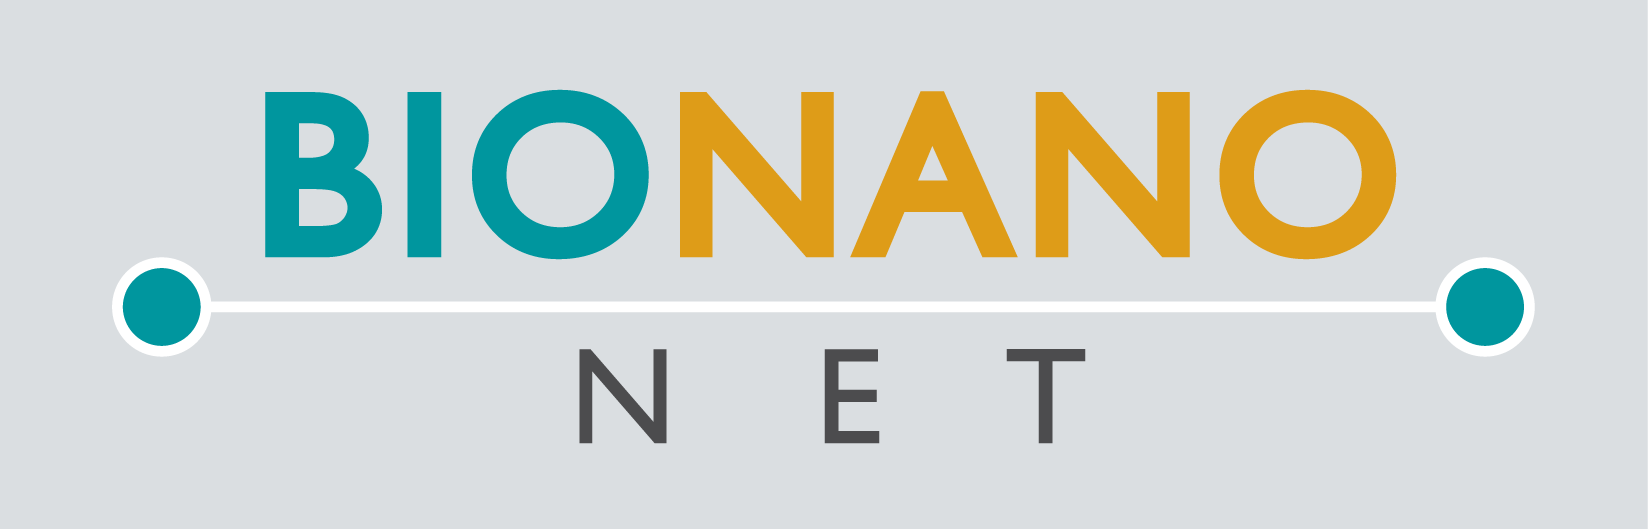 bionanonet logo